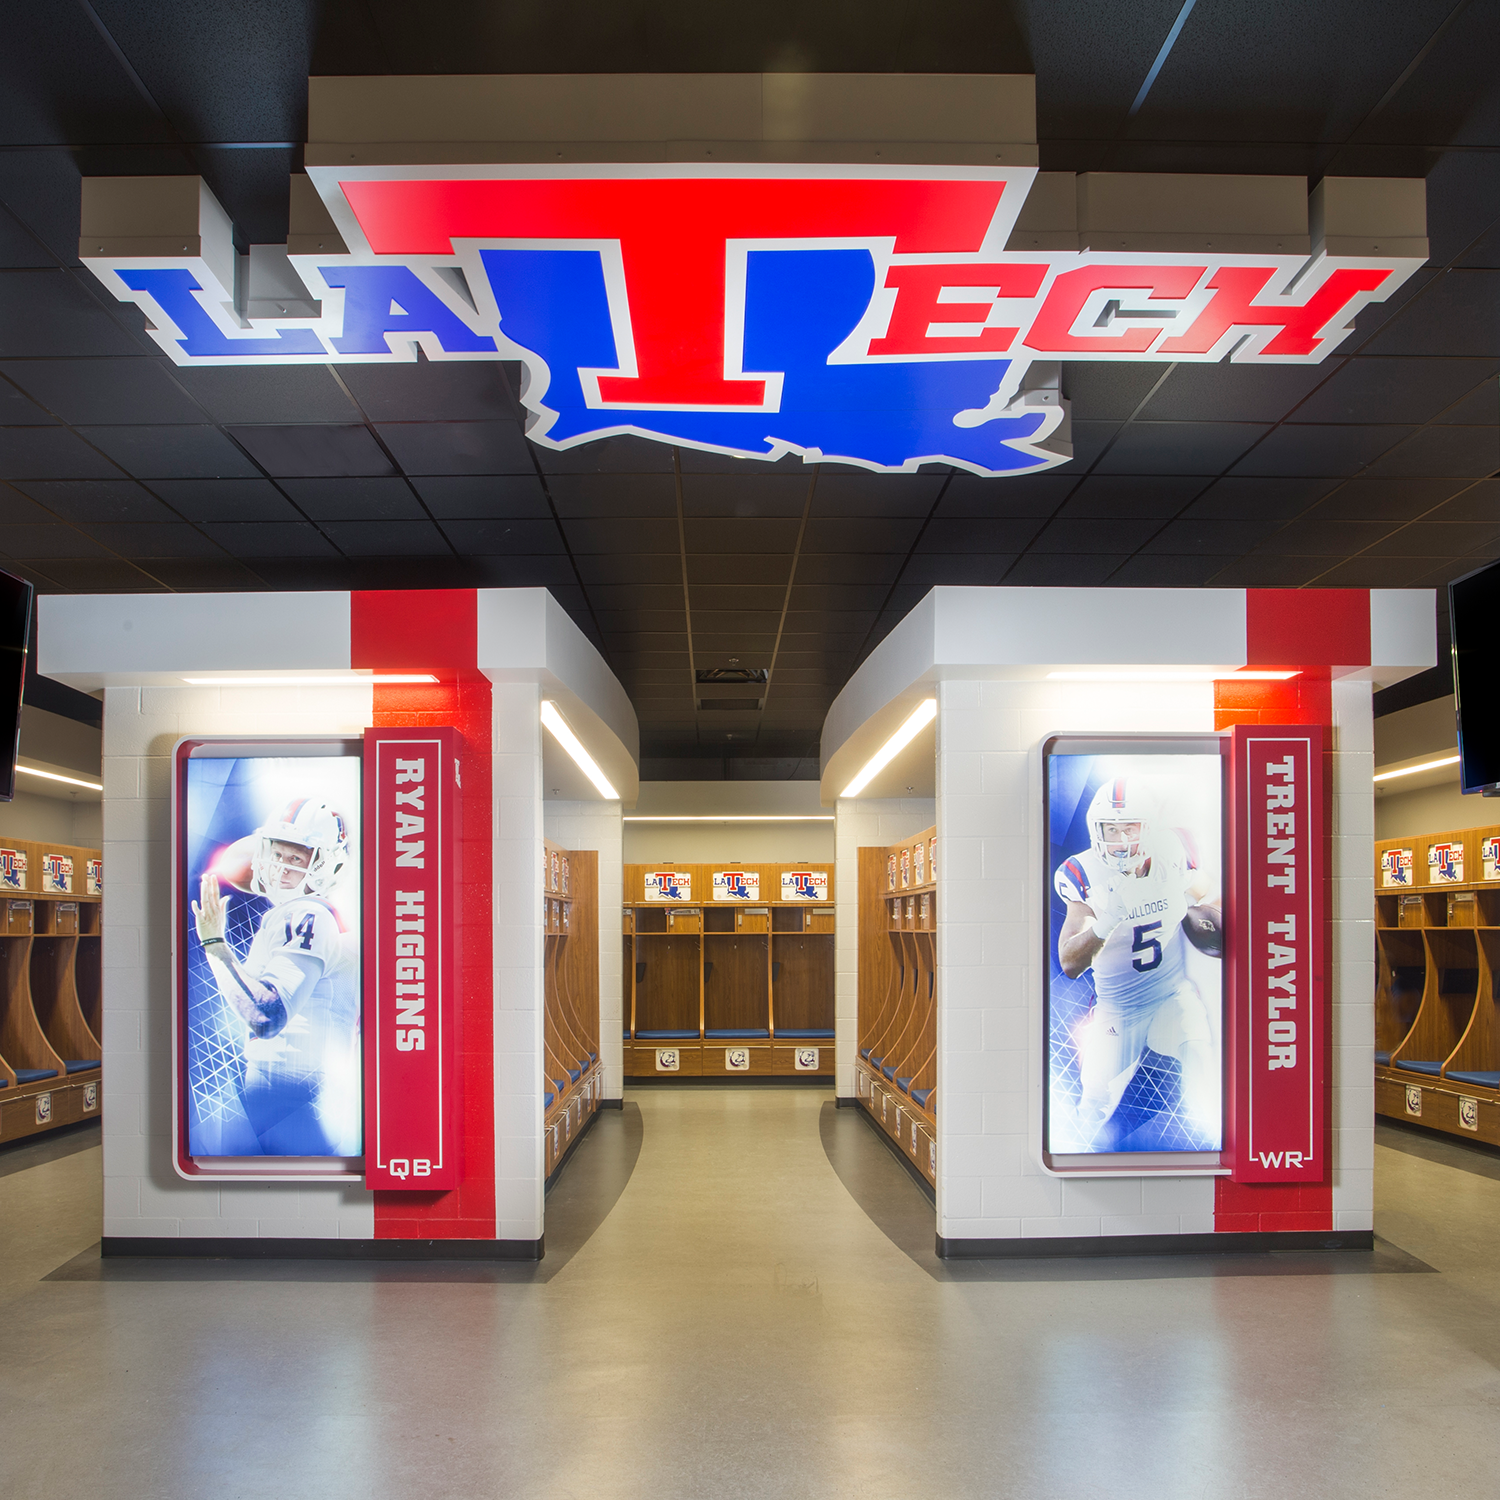 LA-Tech-Football-Locker-Room-horizontal.png